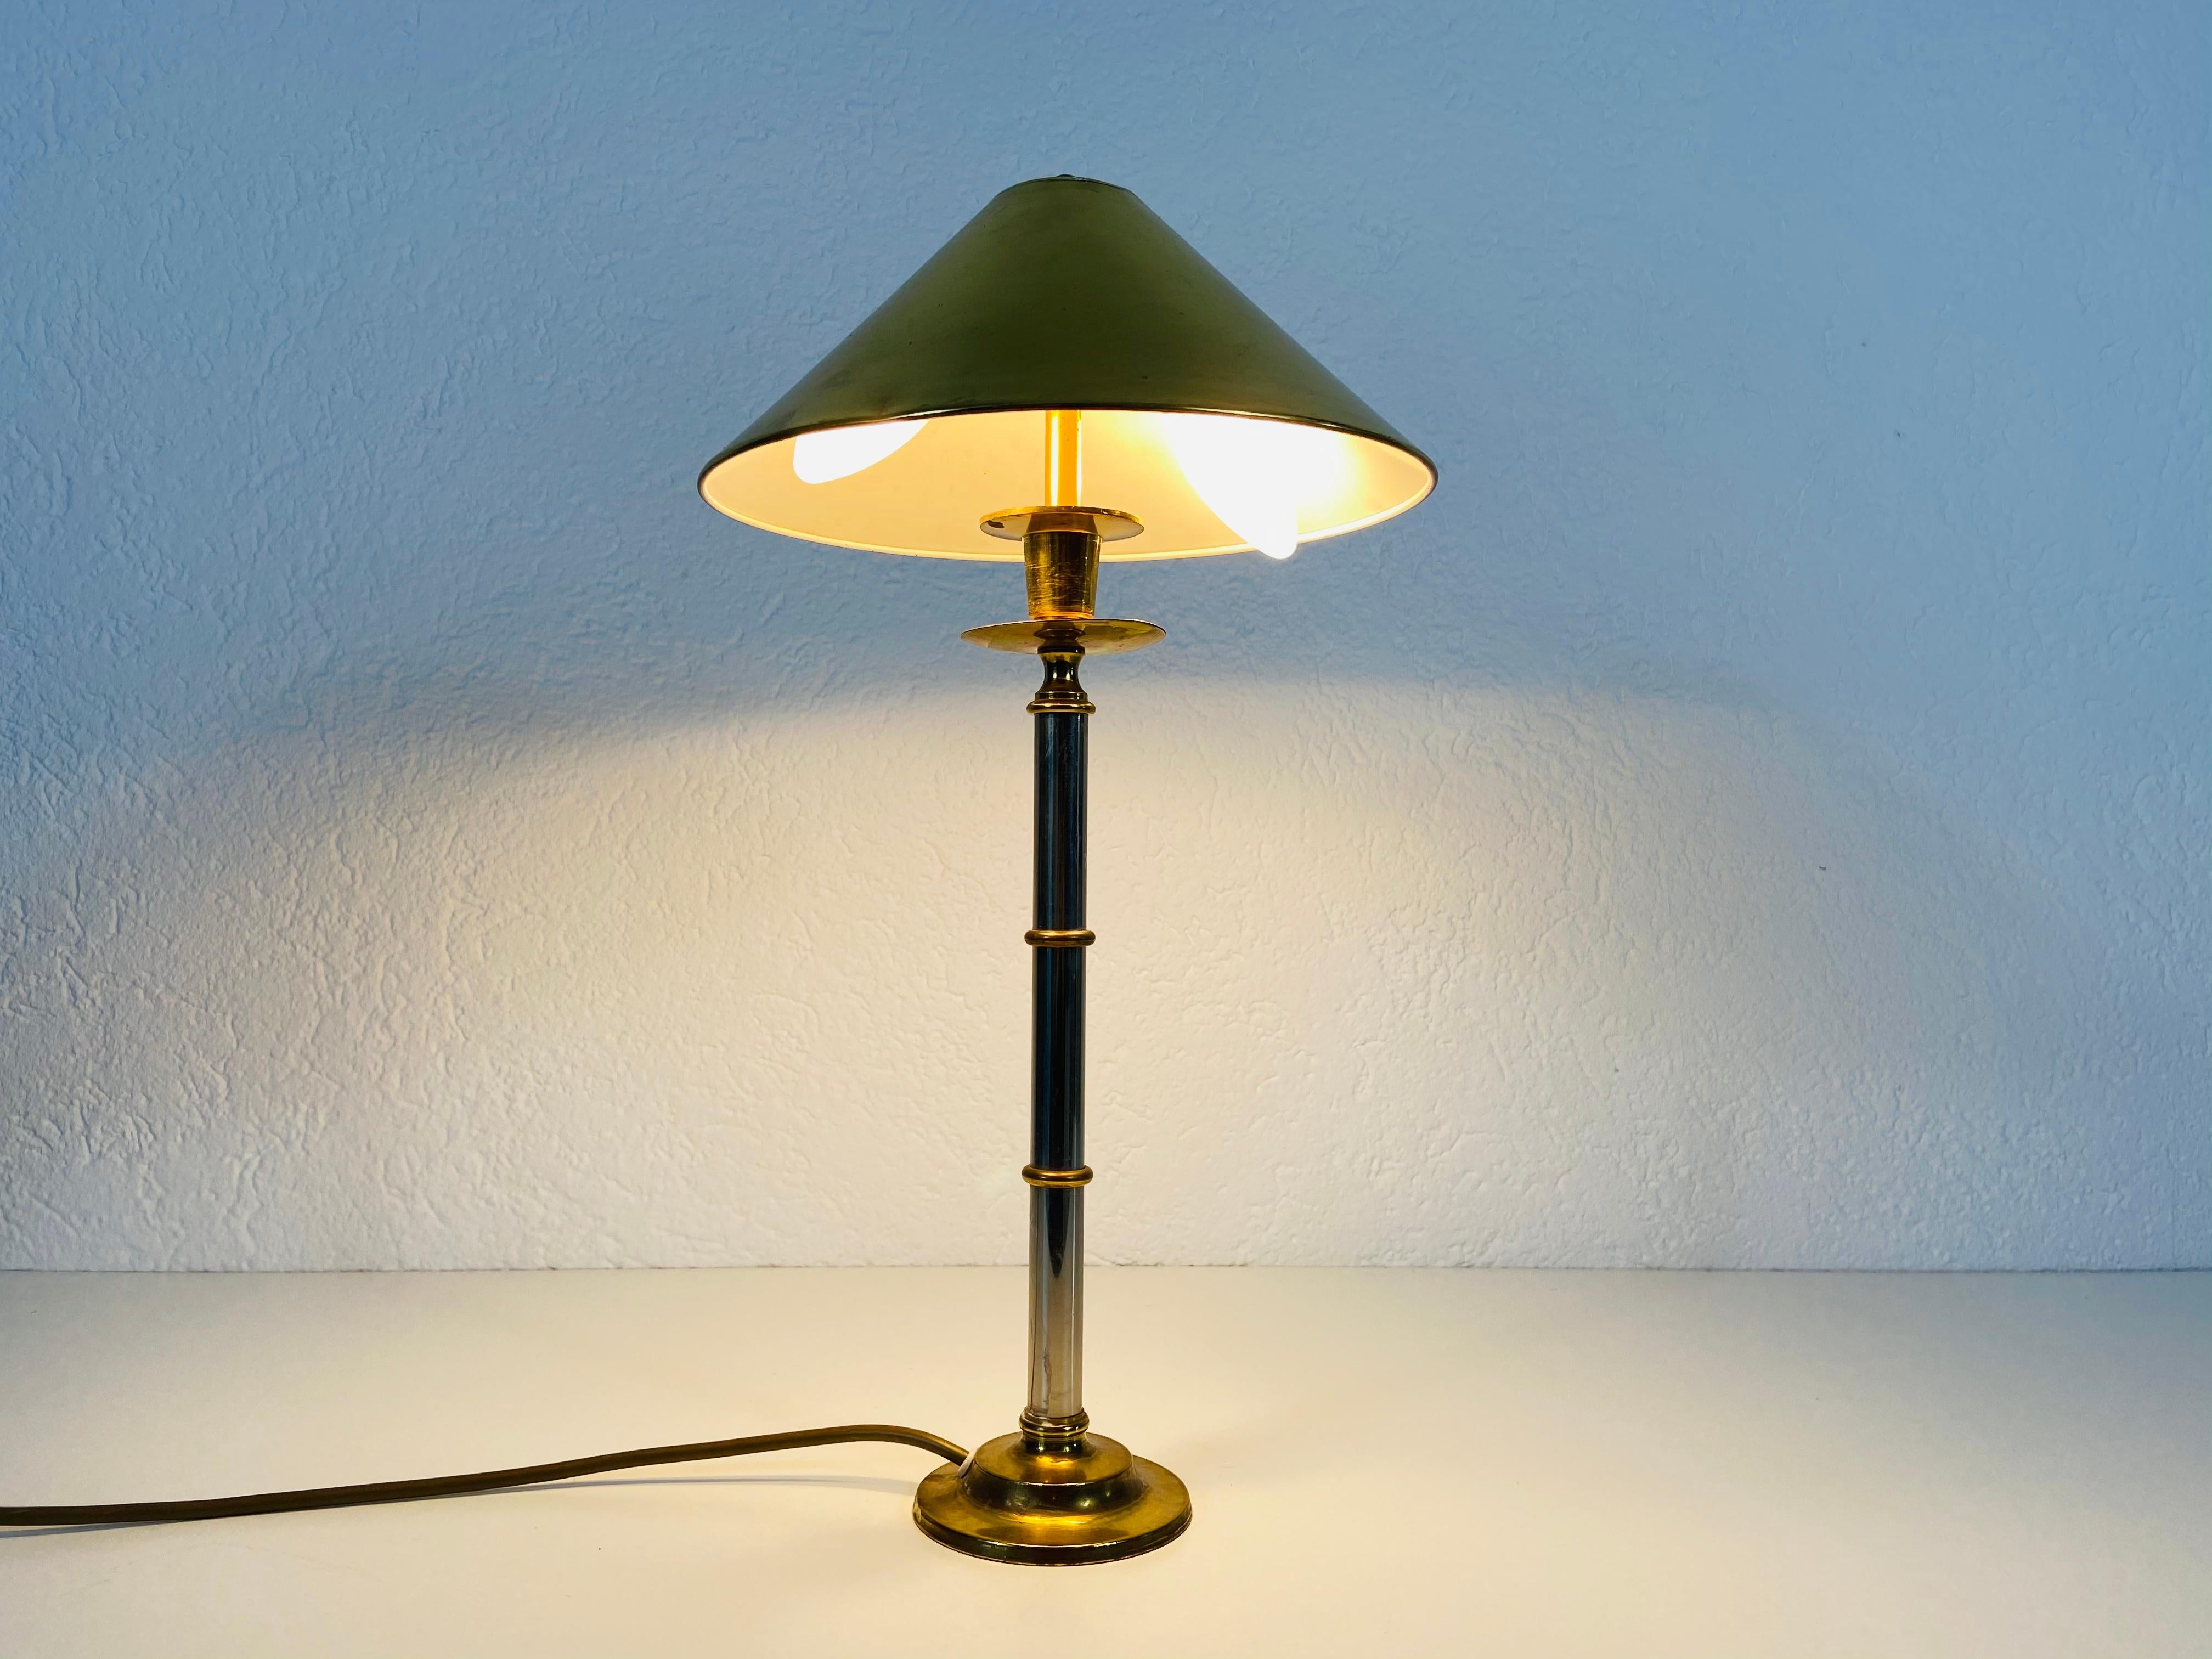 German Midcentury Solid Brass Table Lamp by Vereinigte Werkstätte, 1960s For Sale 6